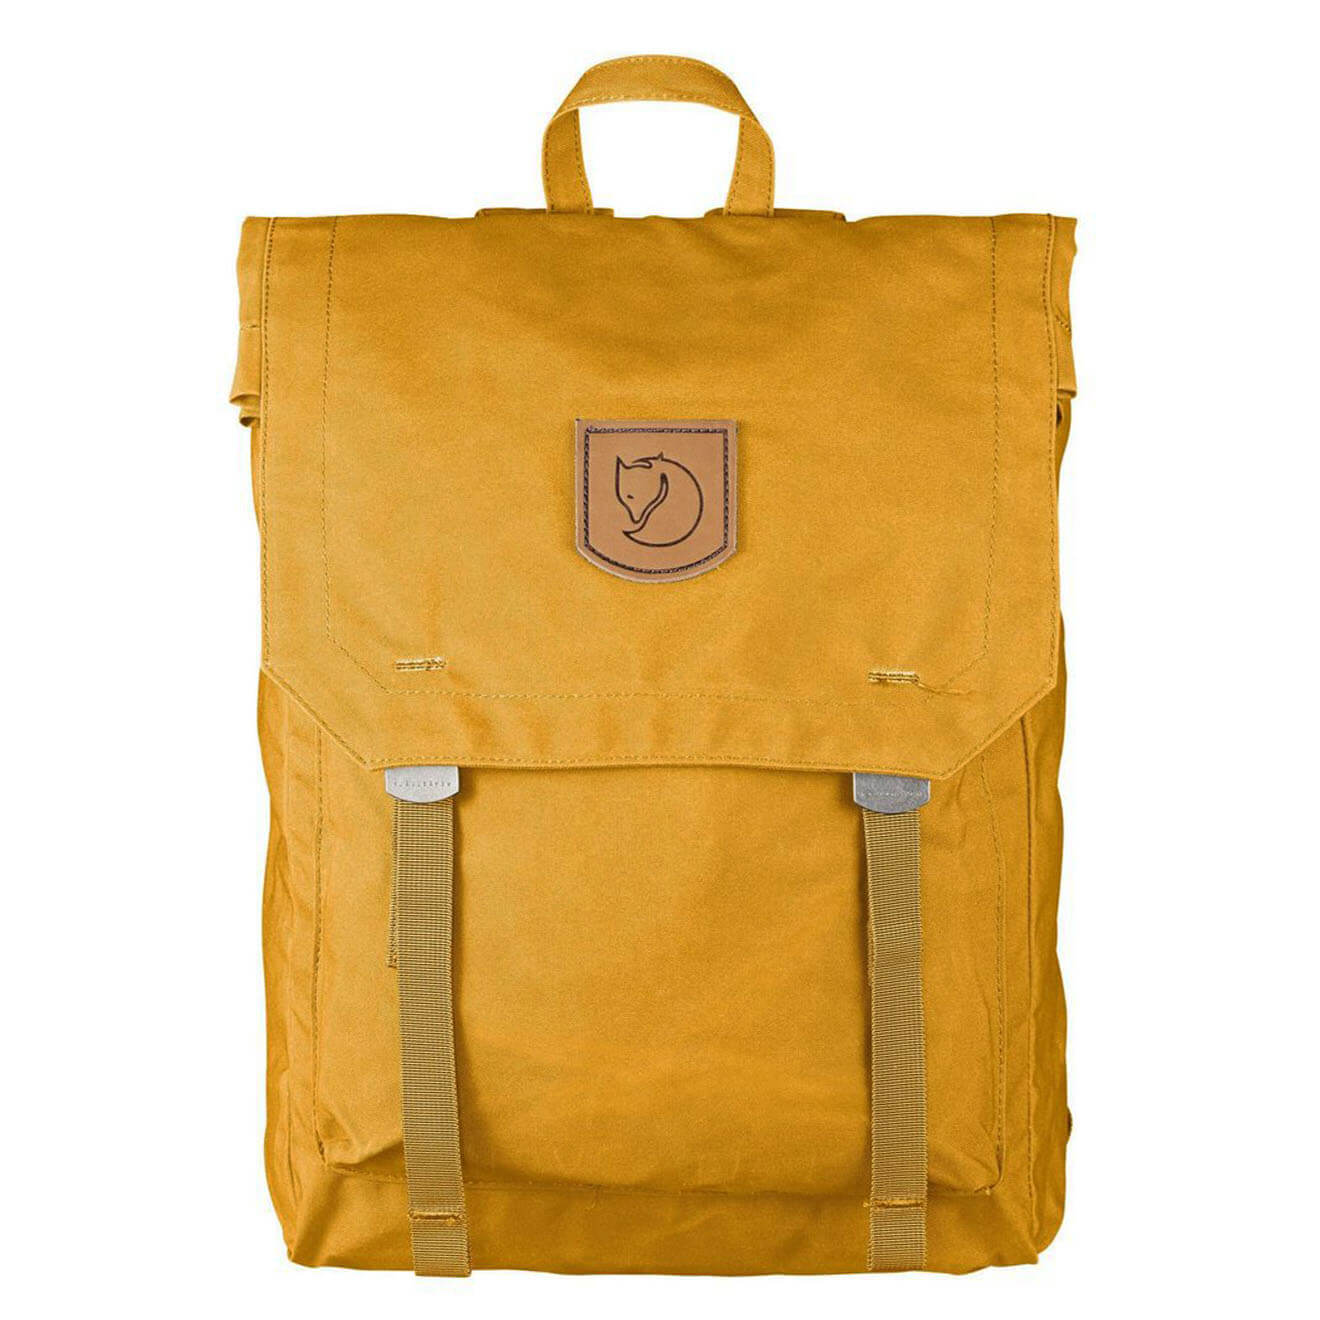 Land overdrijving Helderheid Foldsack No 1 Warm Yellow - Retro Bags